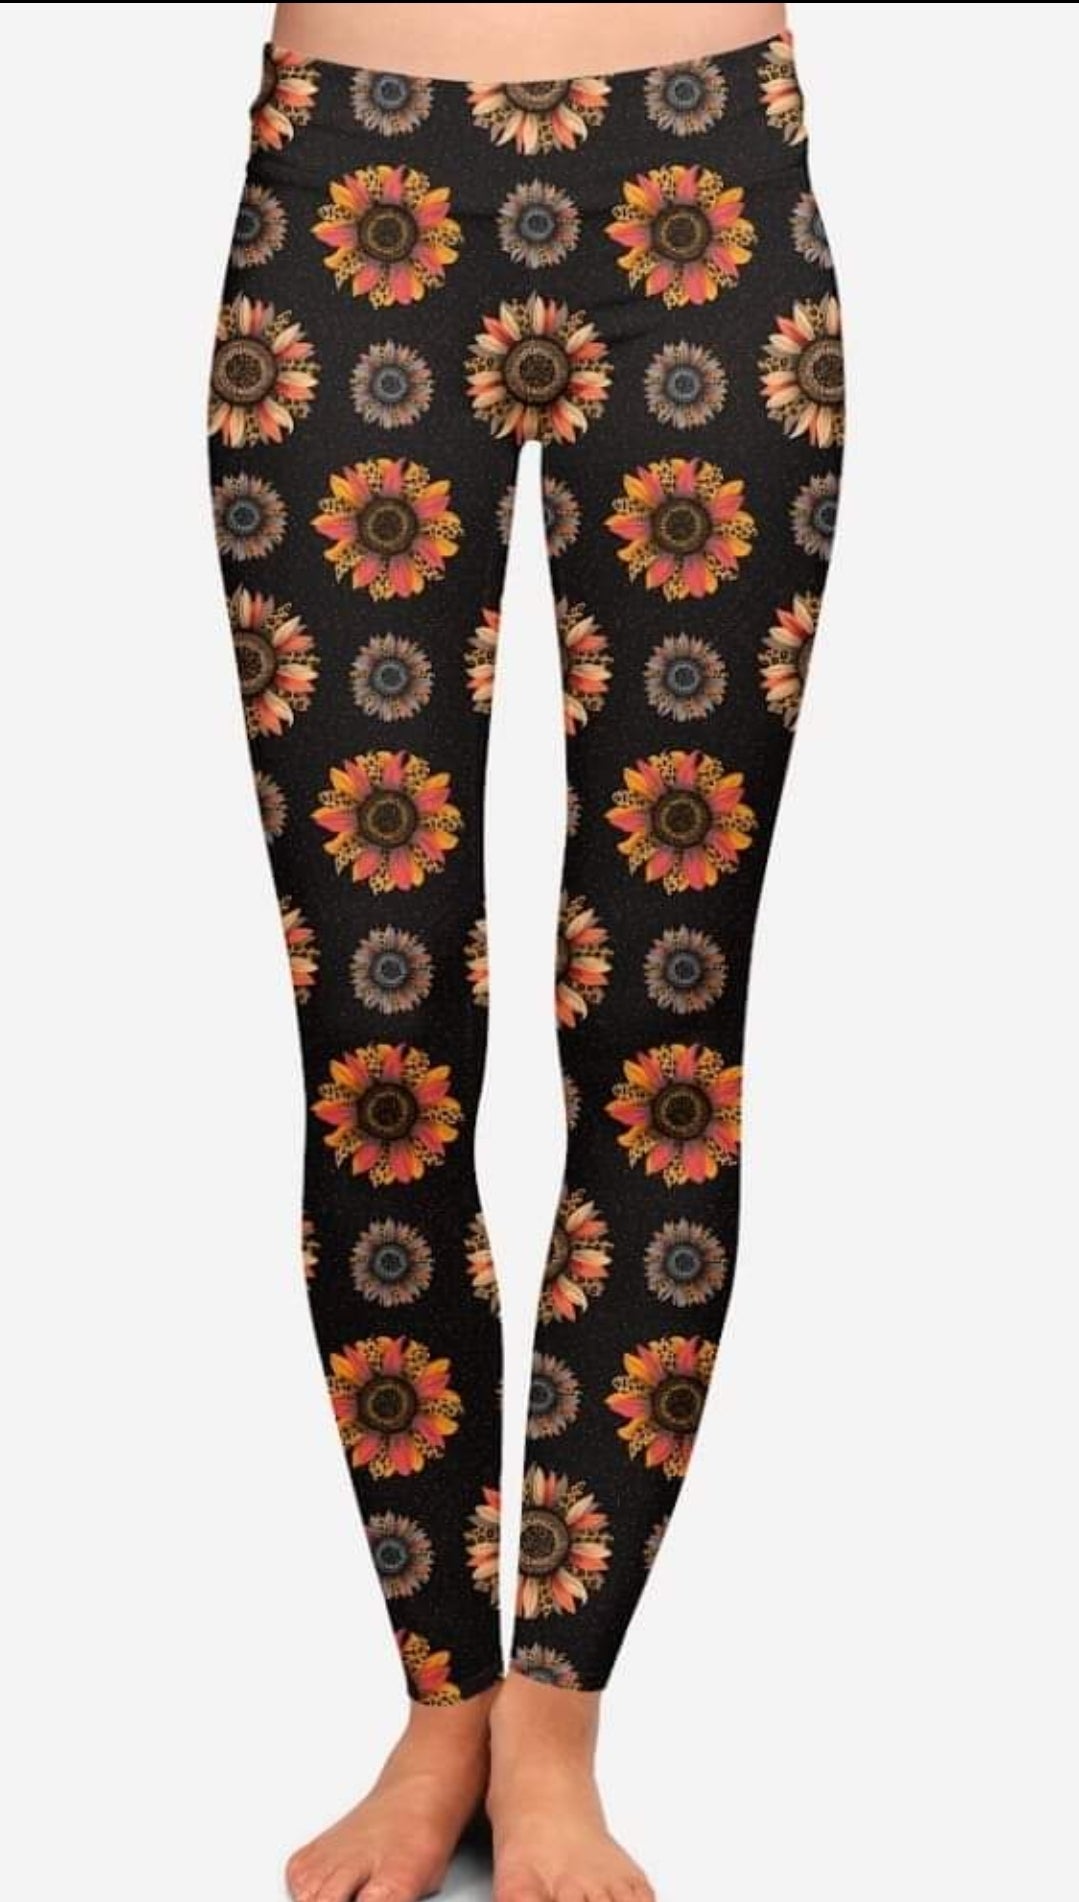 Autumn Sunflowers leggings and lounge pants